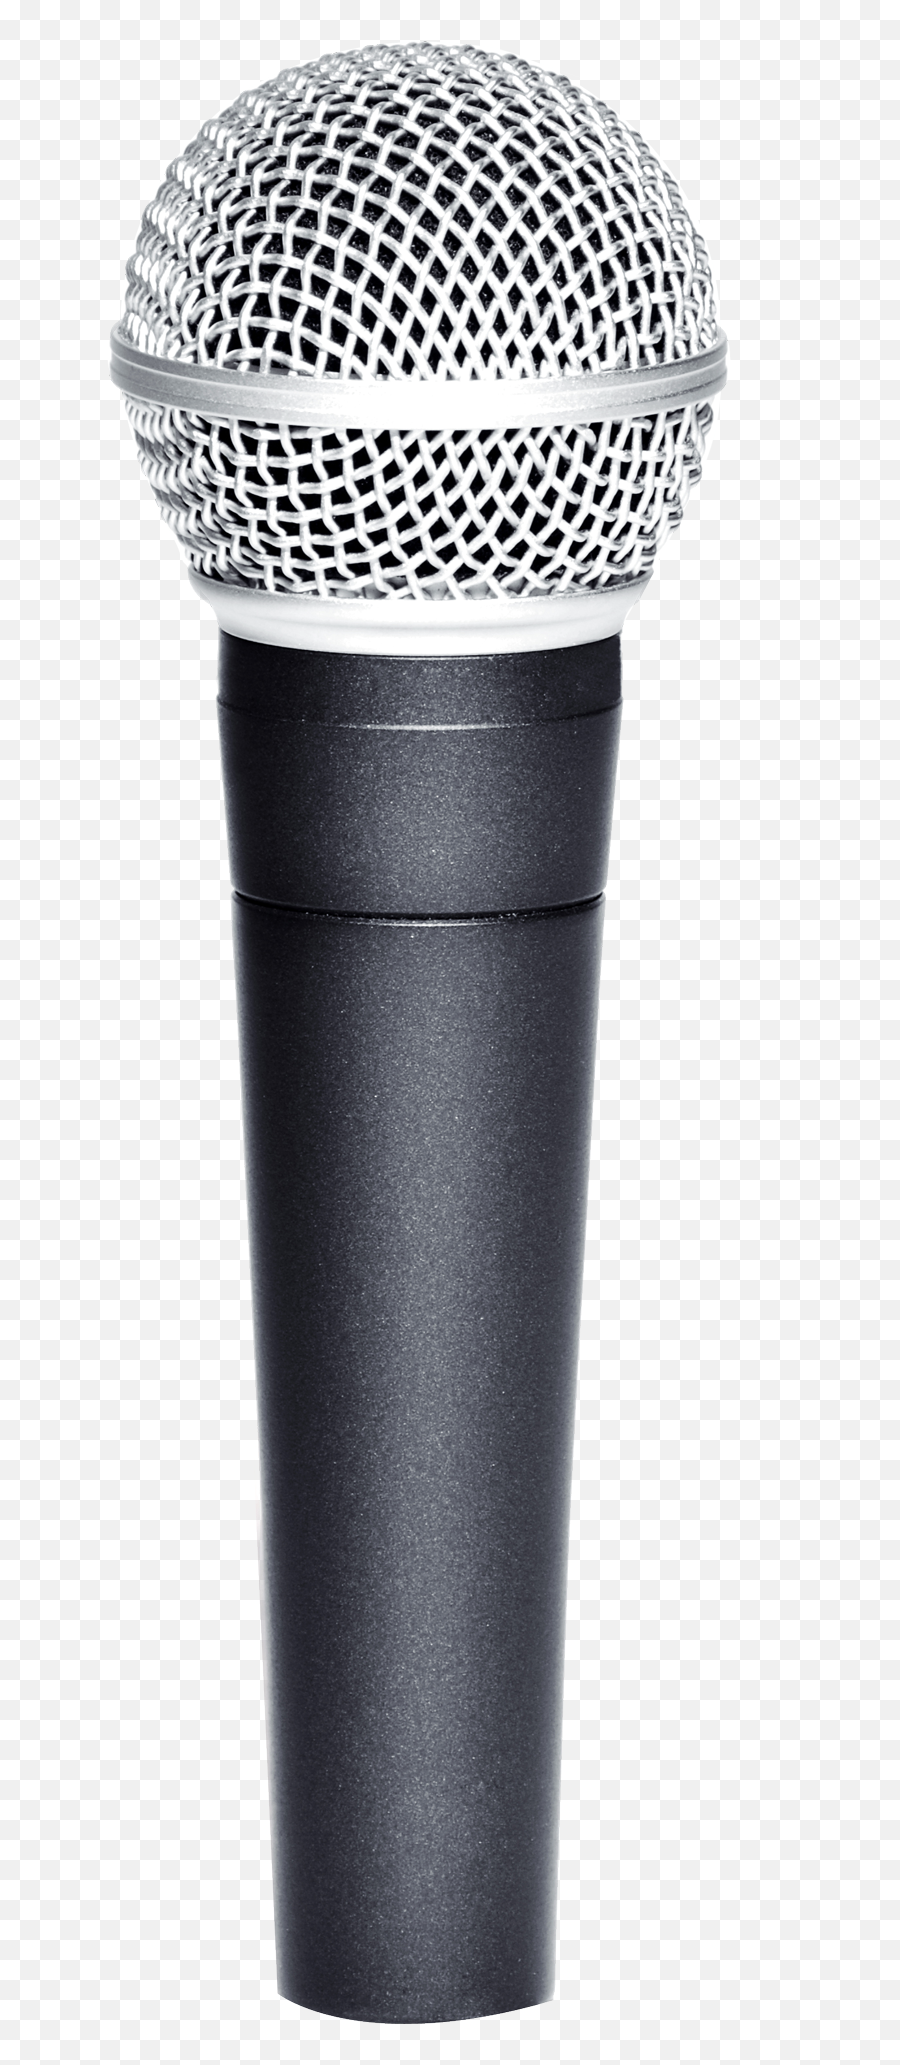 Microphone Images Transparent - Transparent Background Microphone Png,Microphone Clipart Transparent